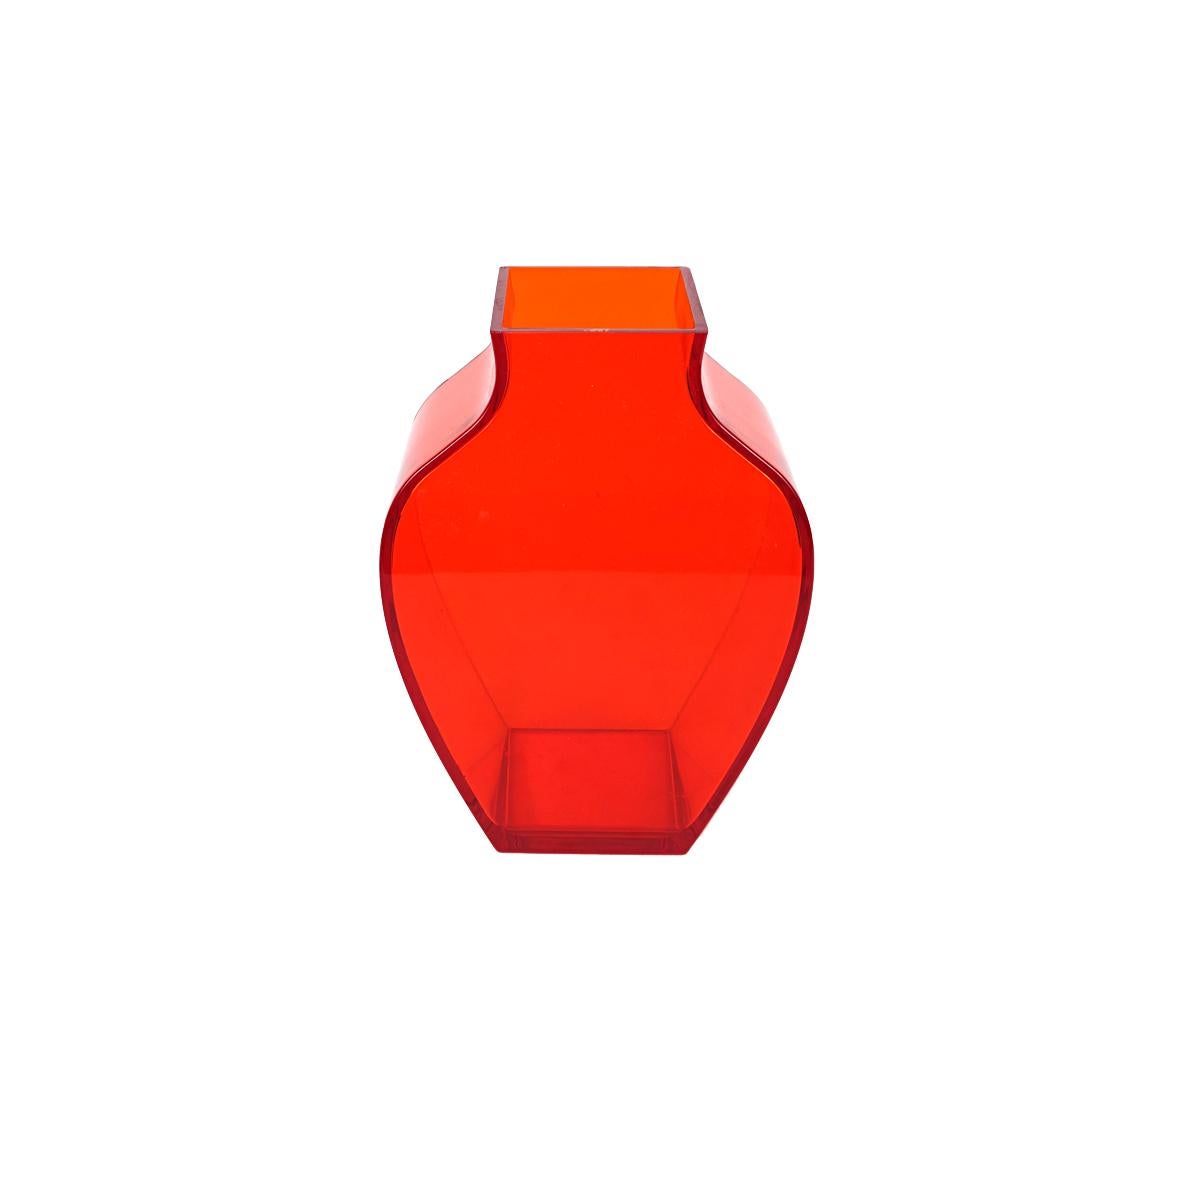 1990s Dutch Design Plexiglass Red Vase Within a Green Vase For Sale 5